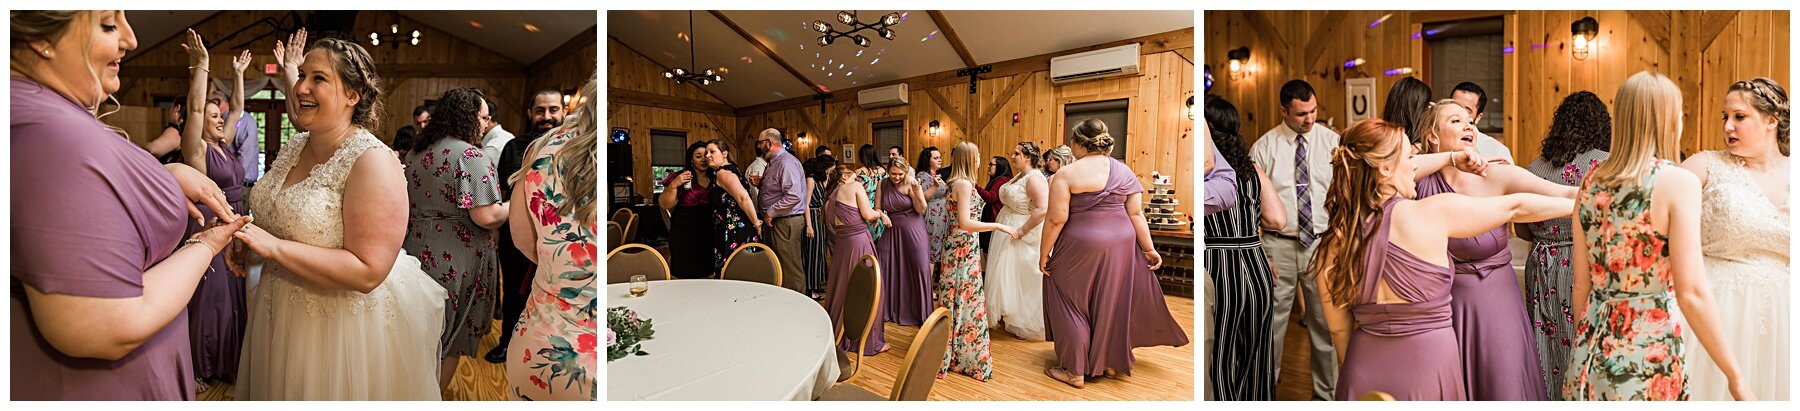 Dance Floor details at wedding reception